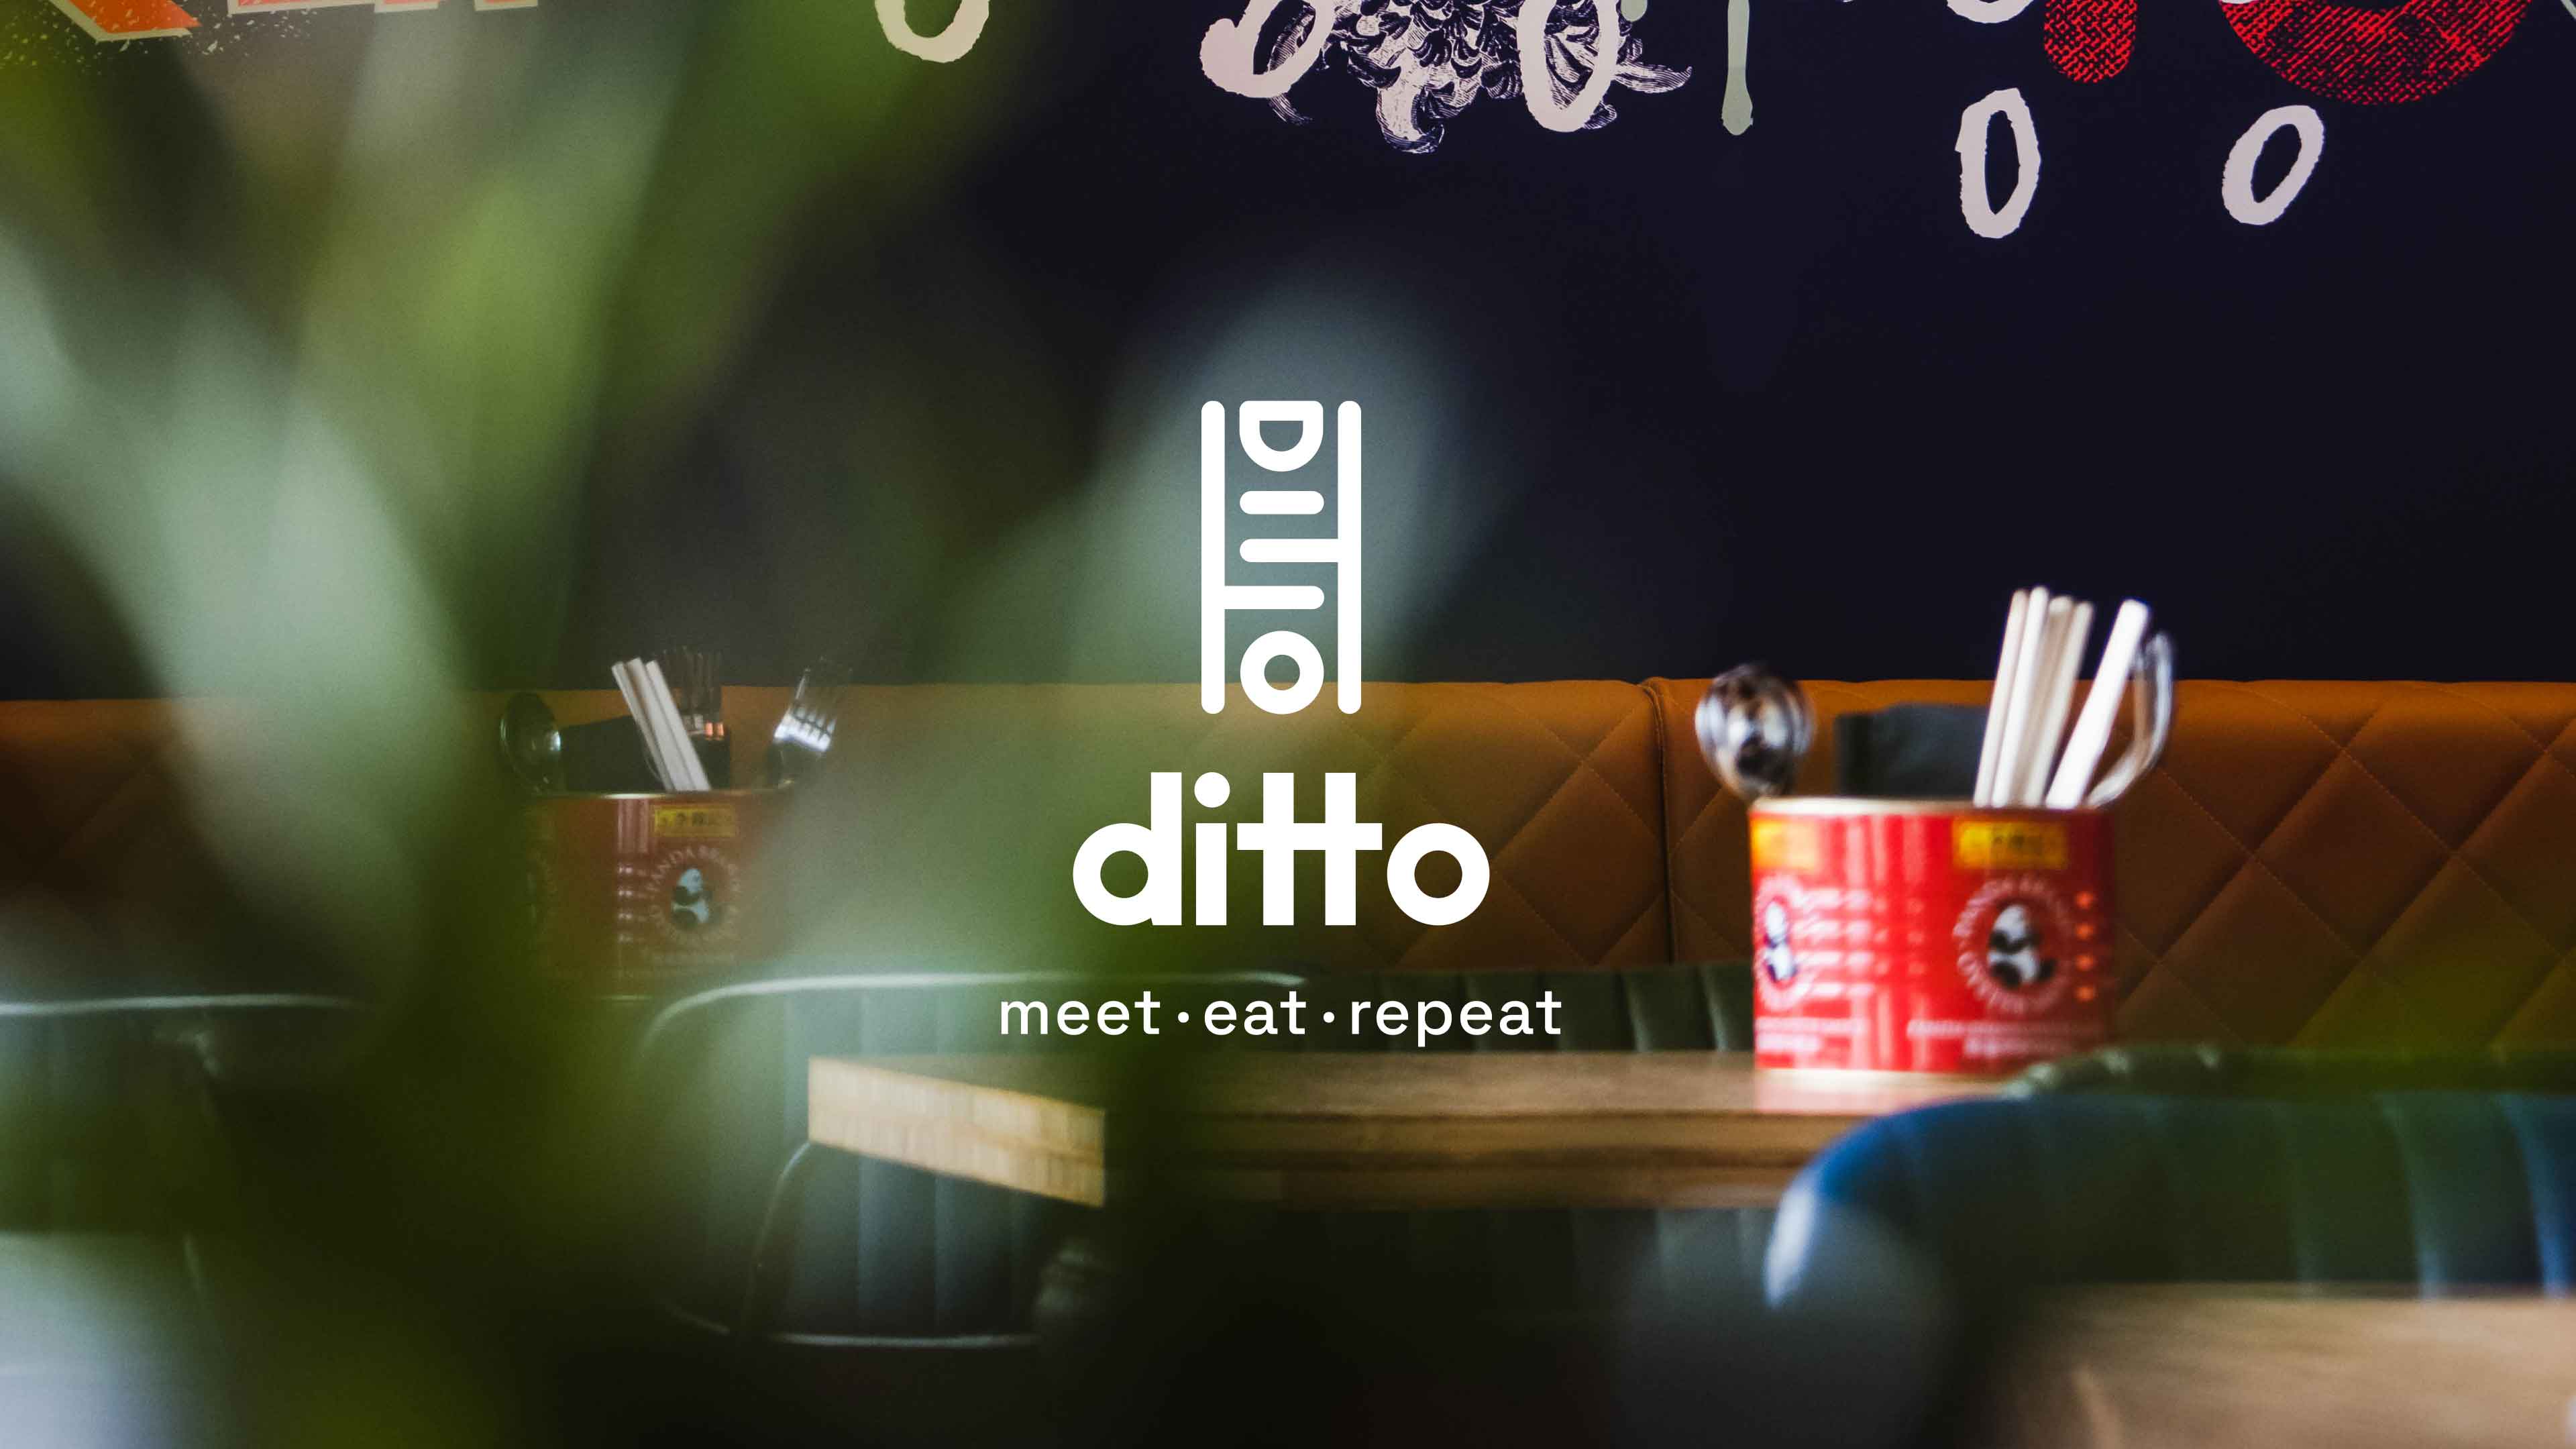 Ditto Restaurant Brand 2